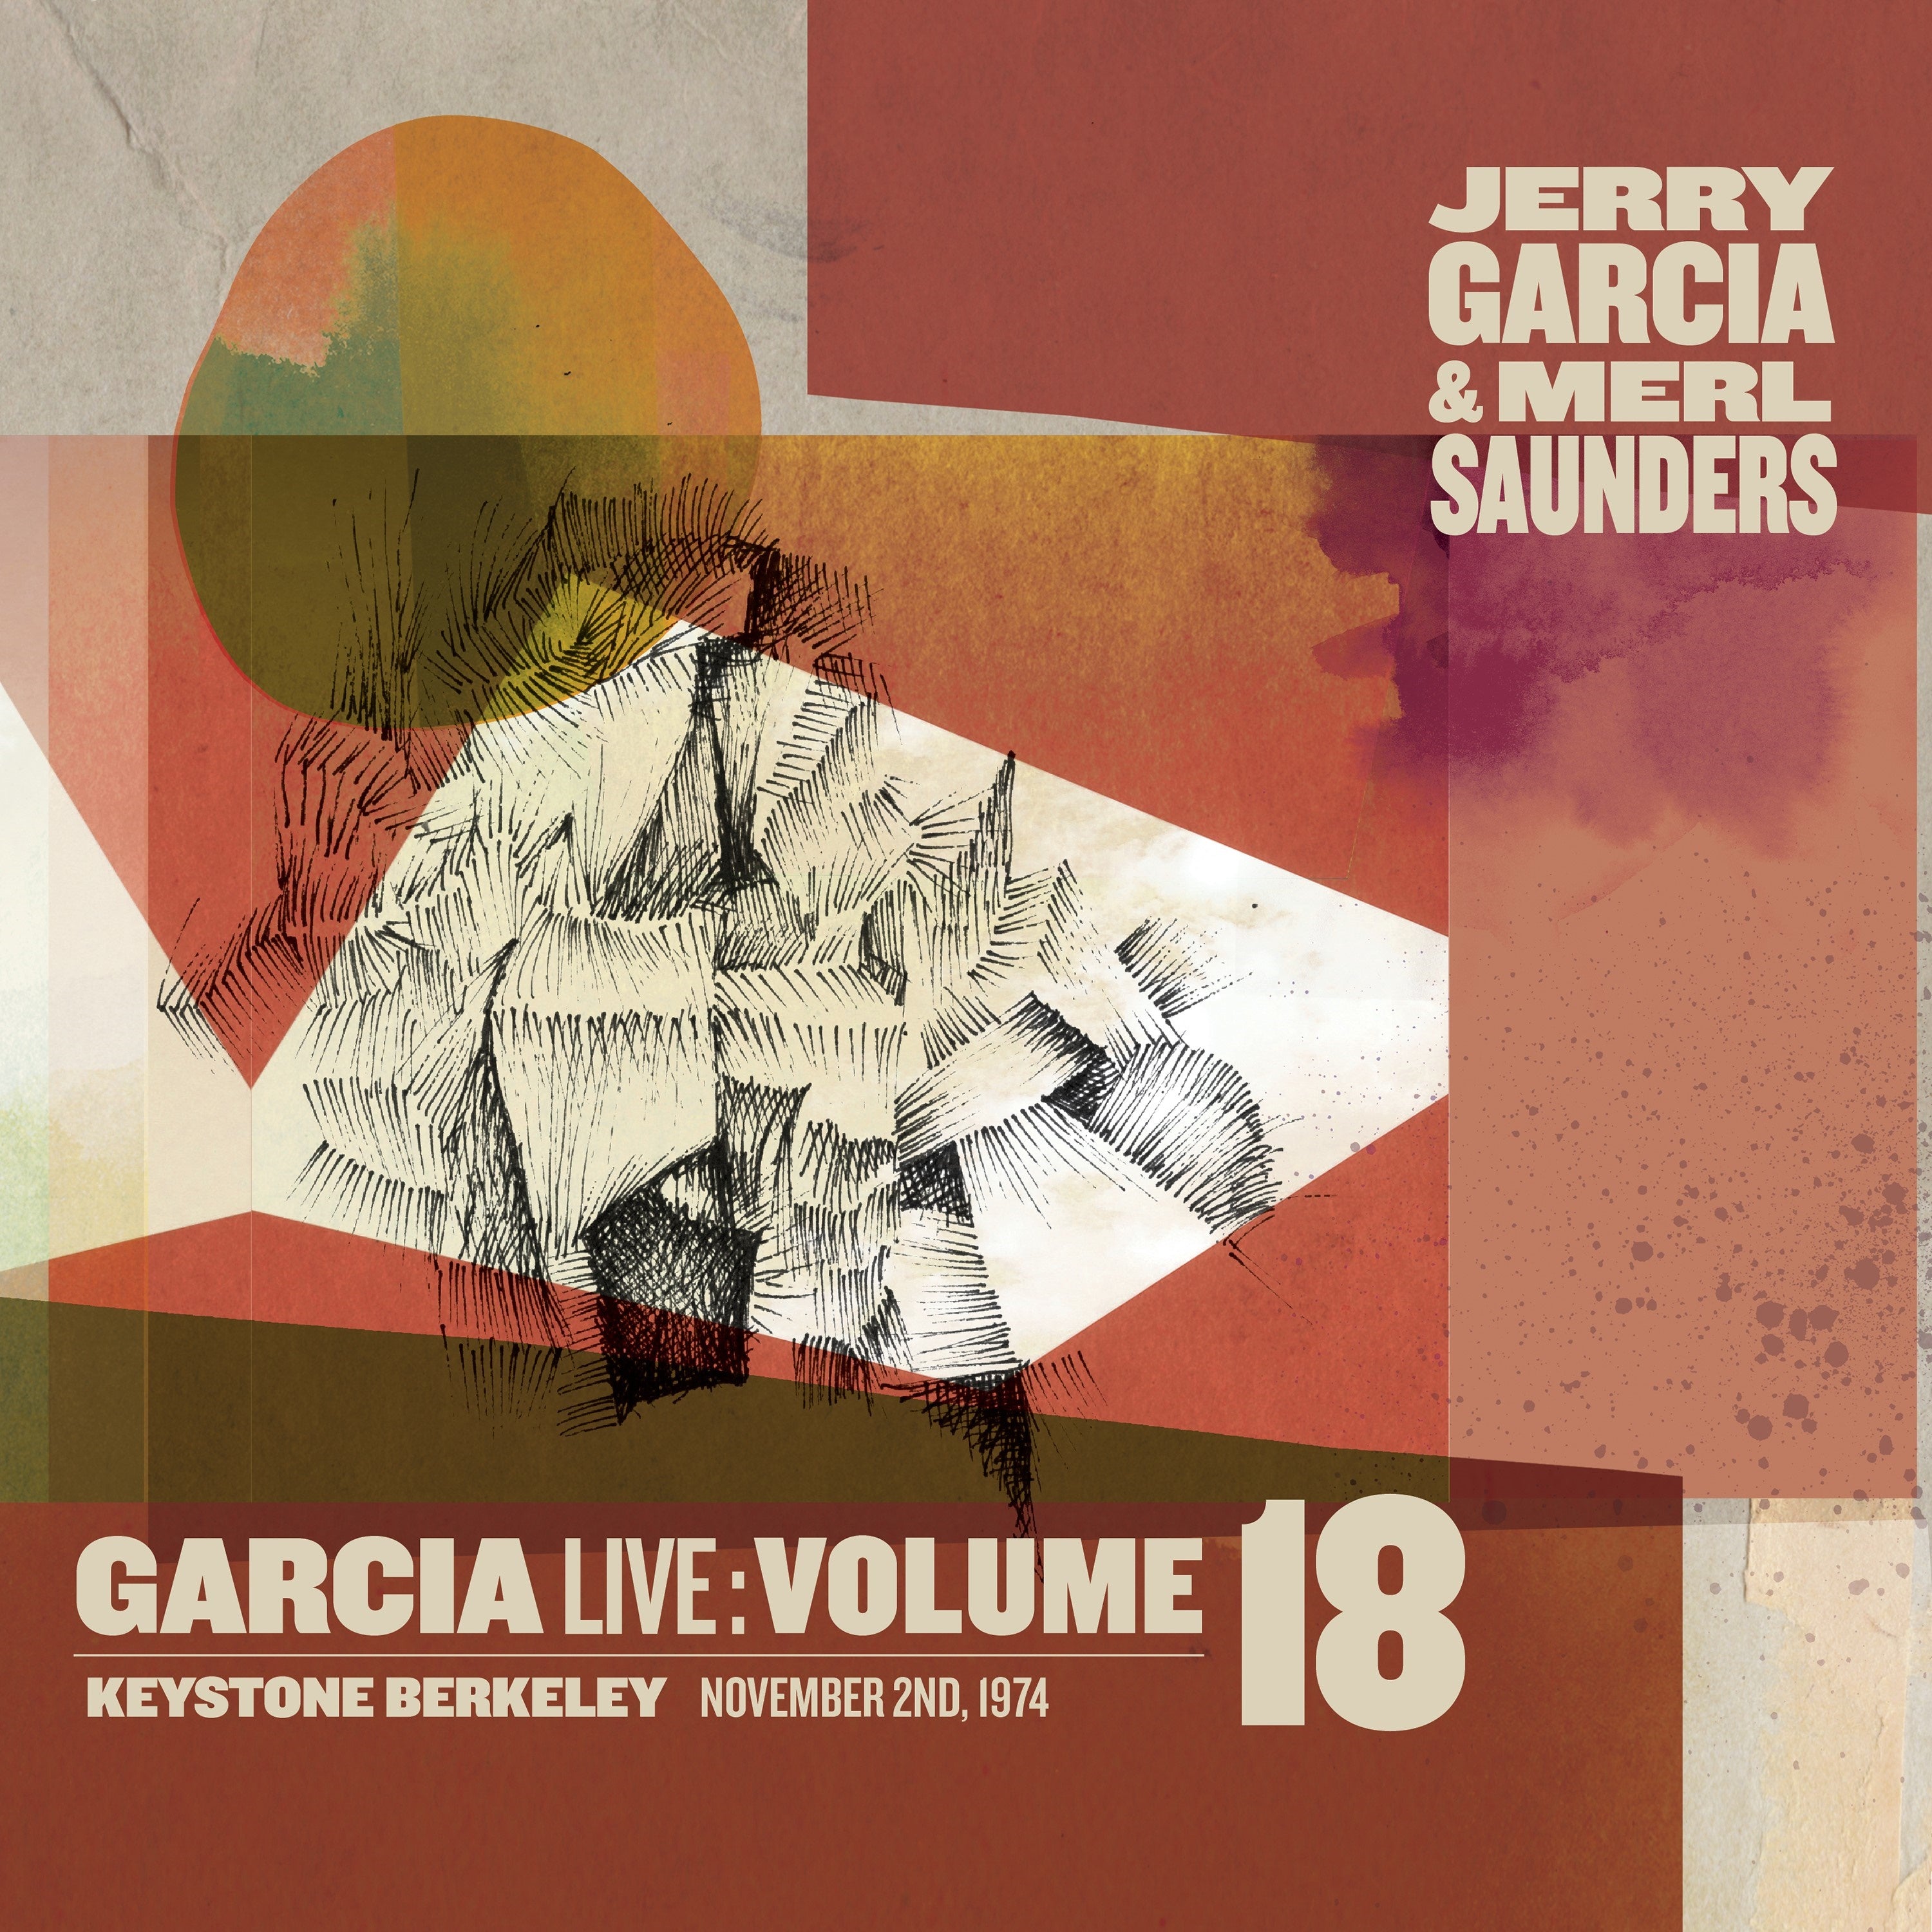 Jerry Garcia & Merl Saunders | GarciaLive Vol. 18: November 2nd, 1974 - Keystone Berkeley [2 CD] | CD